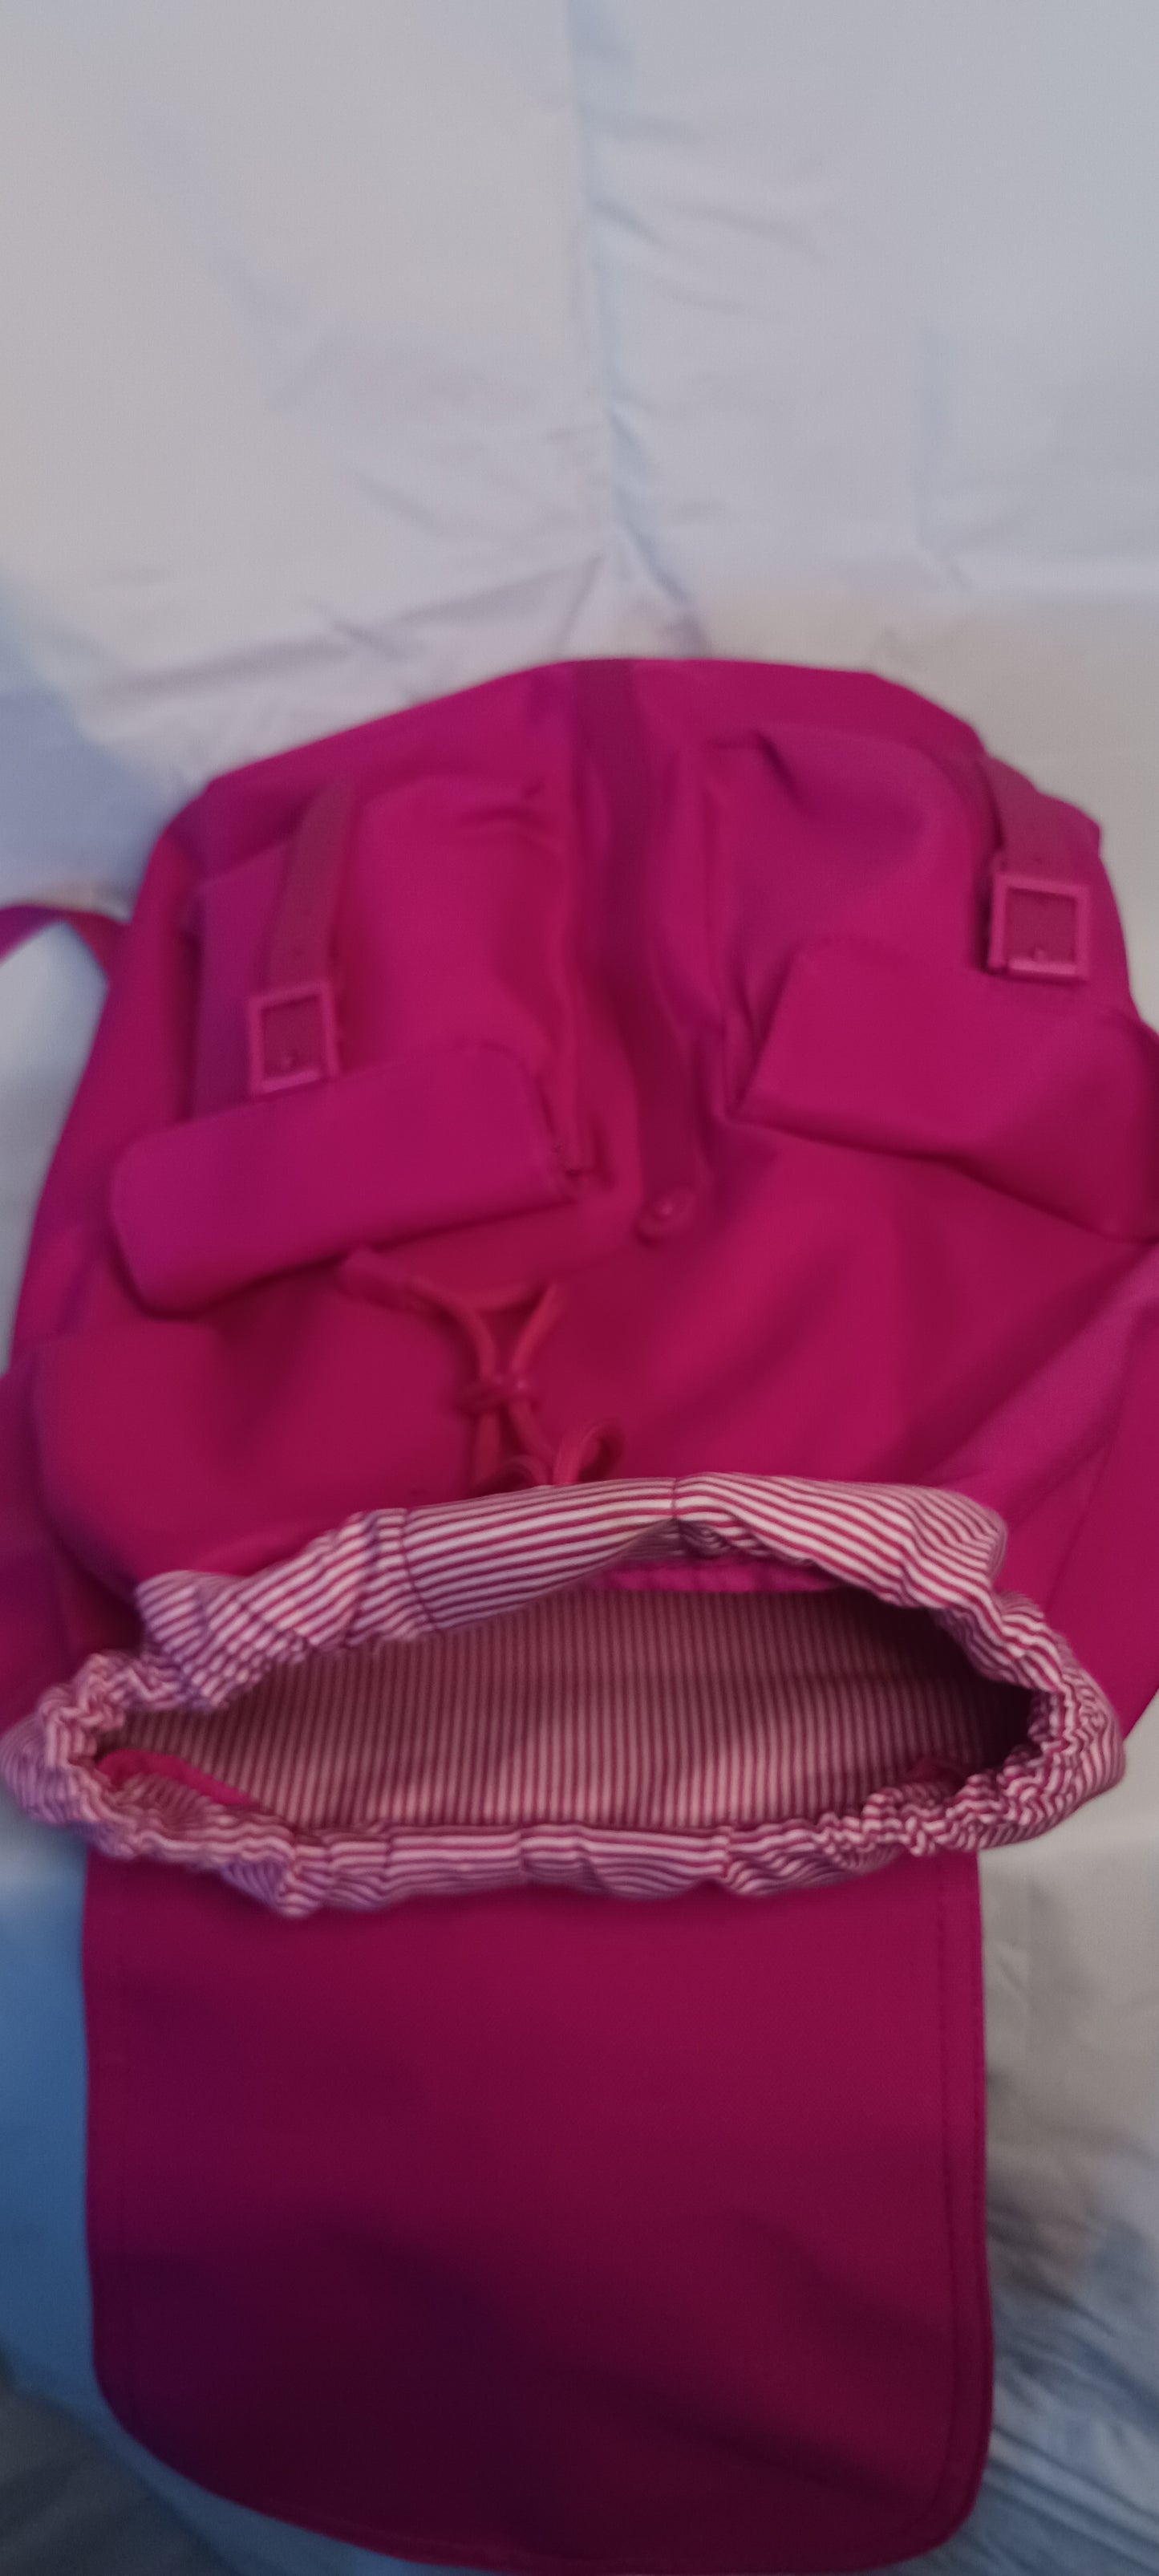 New No boundaries pink backpack